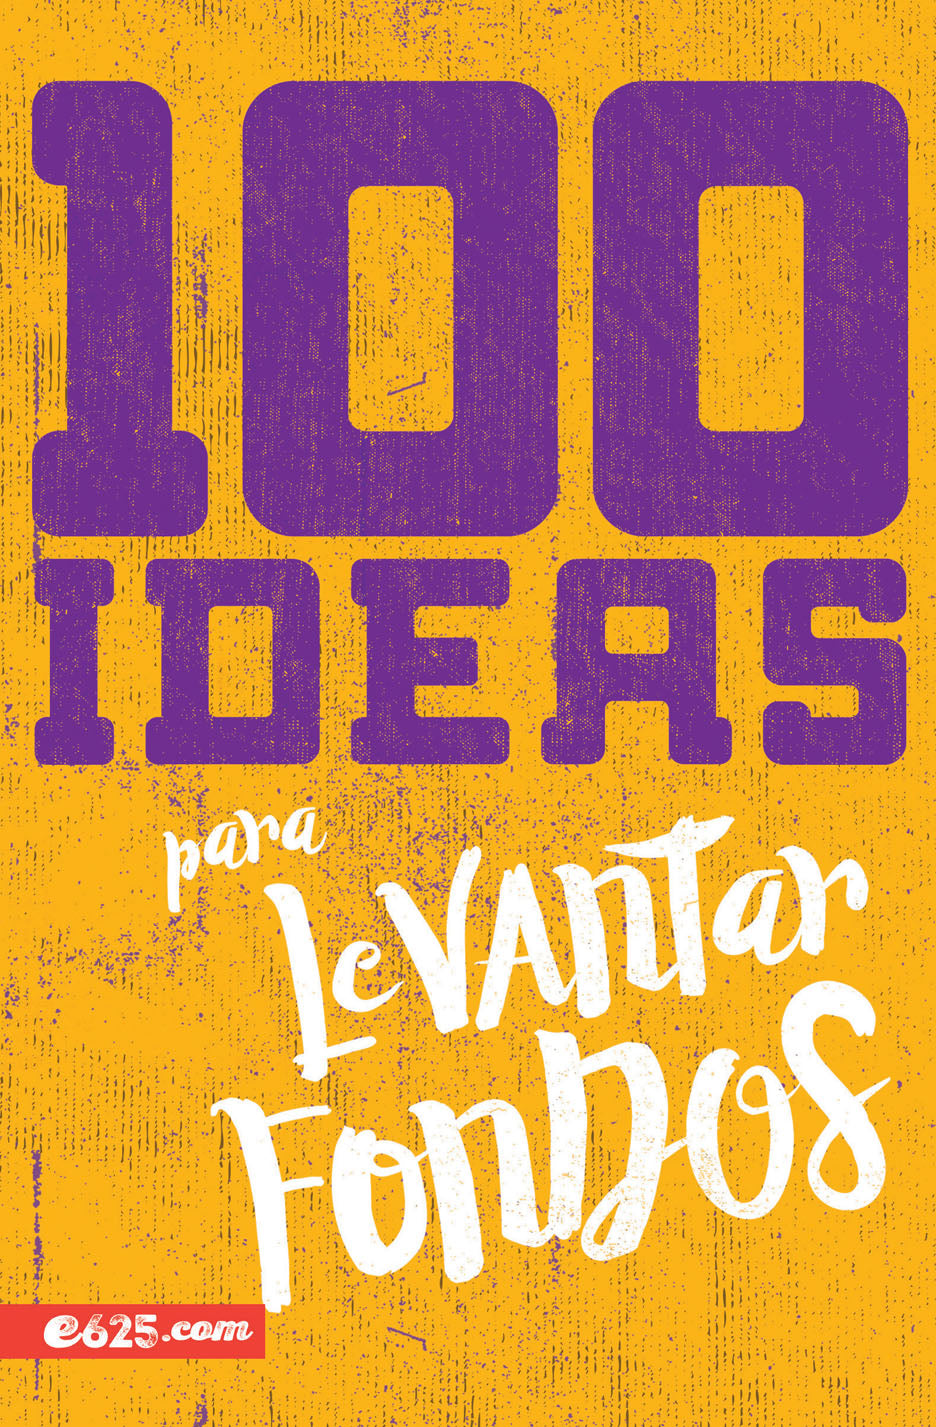 100 Ideas Para Levantar Fondos - E625